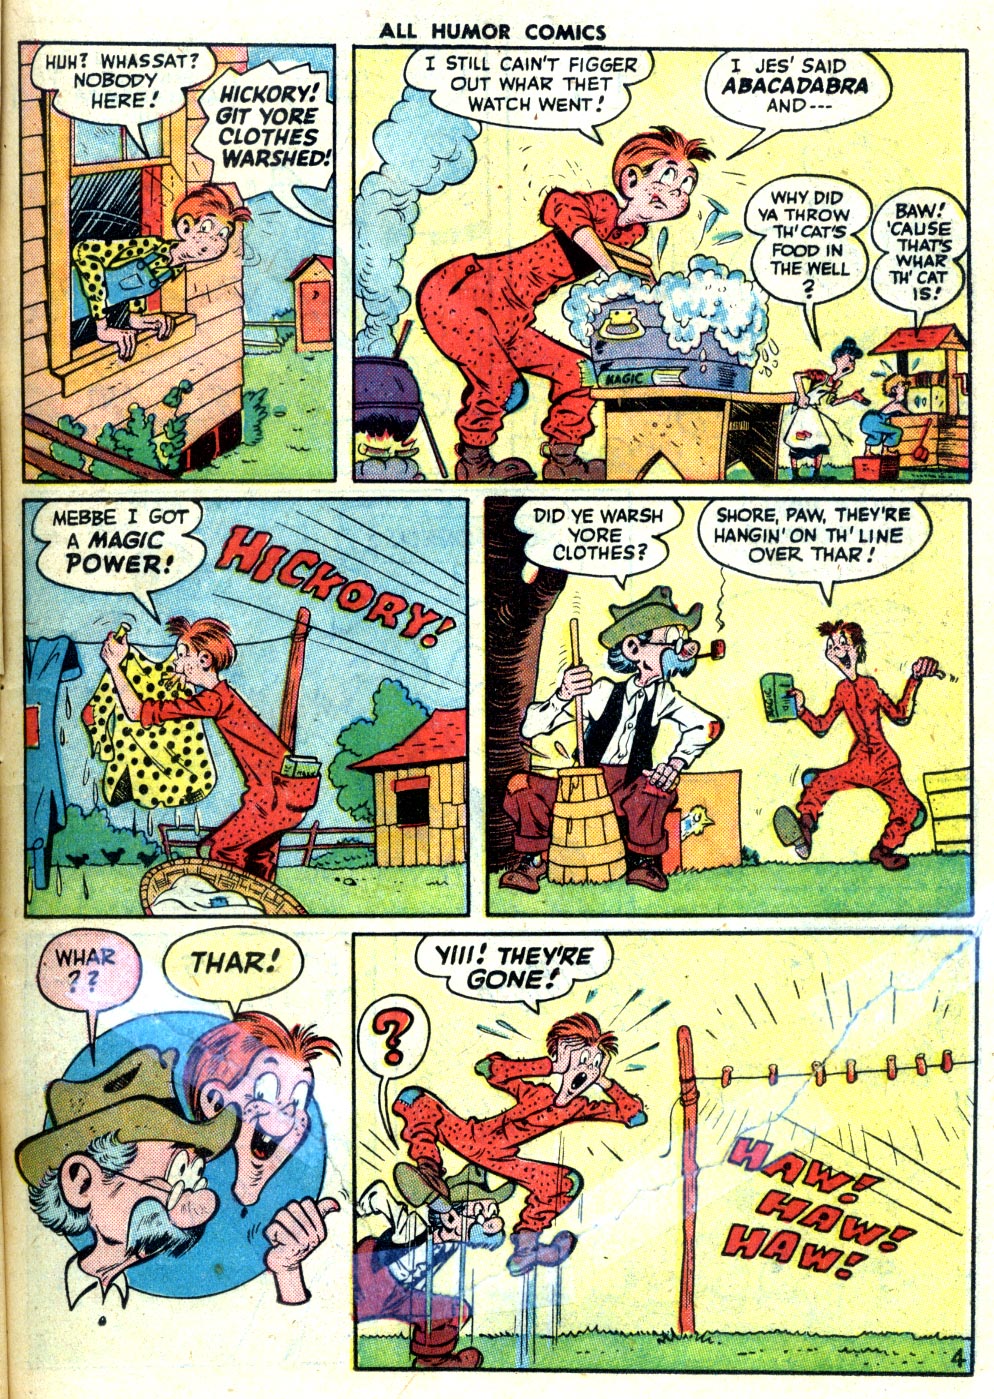 All-Humor-Comics c (29)